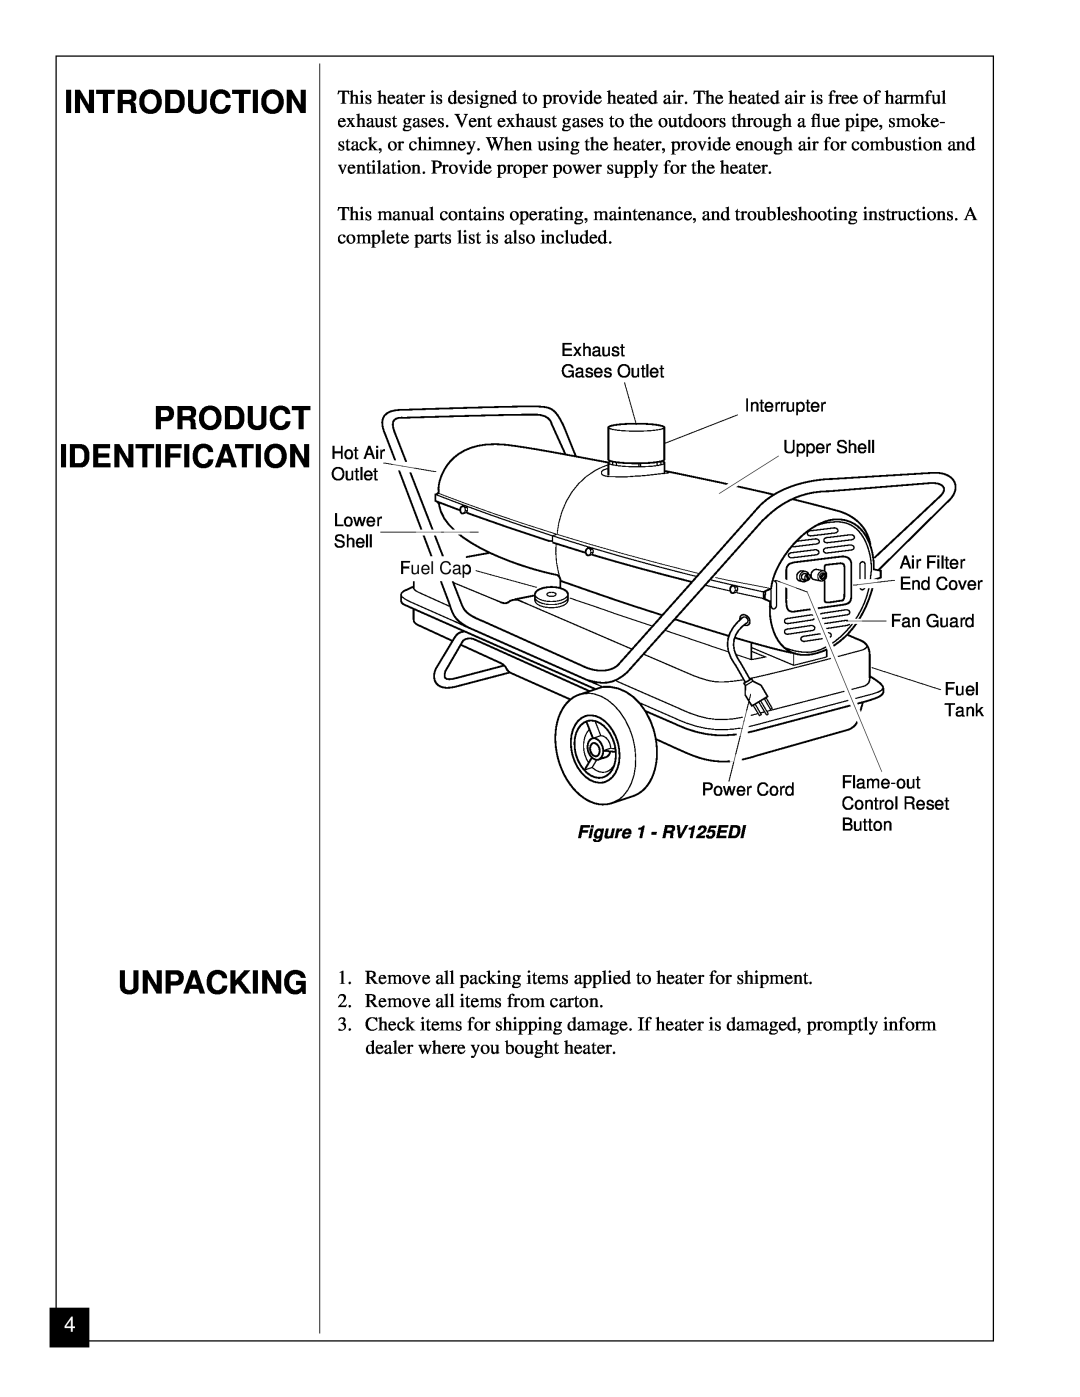 Desa RV125EDI owner manual Introduction, Unpacking, Product Identification 